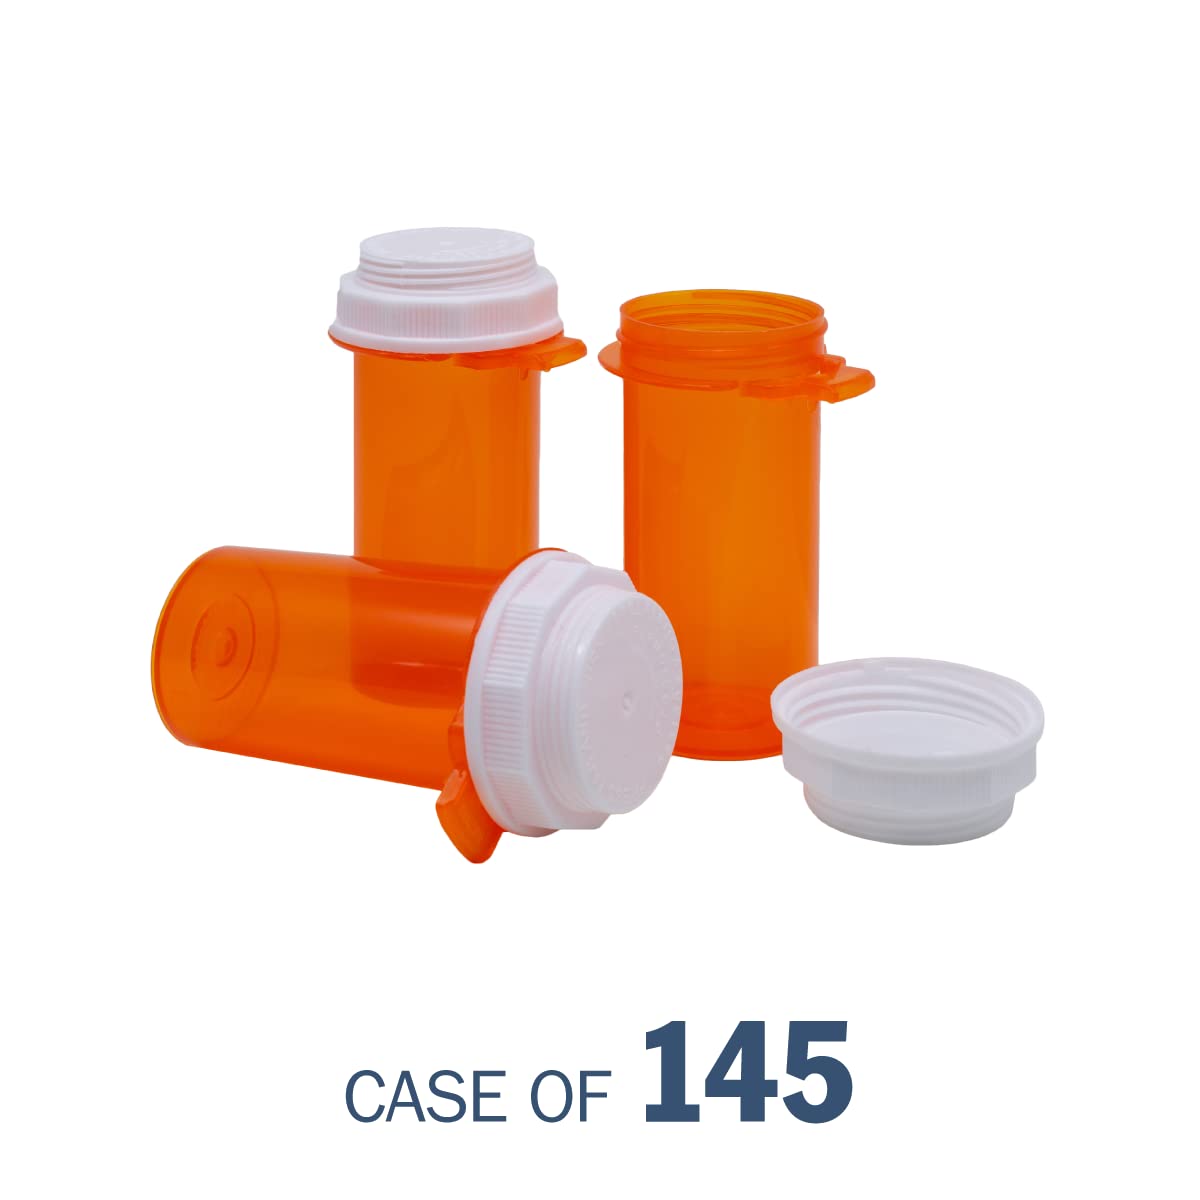 Ezy Dose Pill Box and Medicine, Vitamin Container & Vial, 20 Dram Storage, Child-Resistant Cap, Case of 145